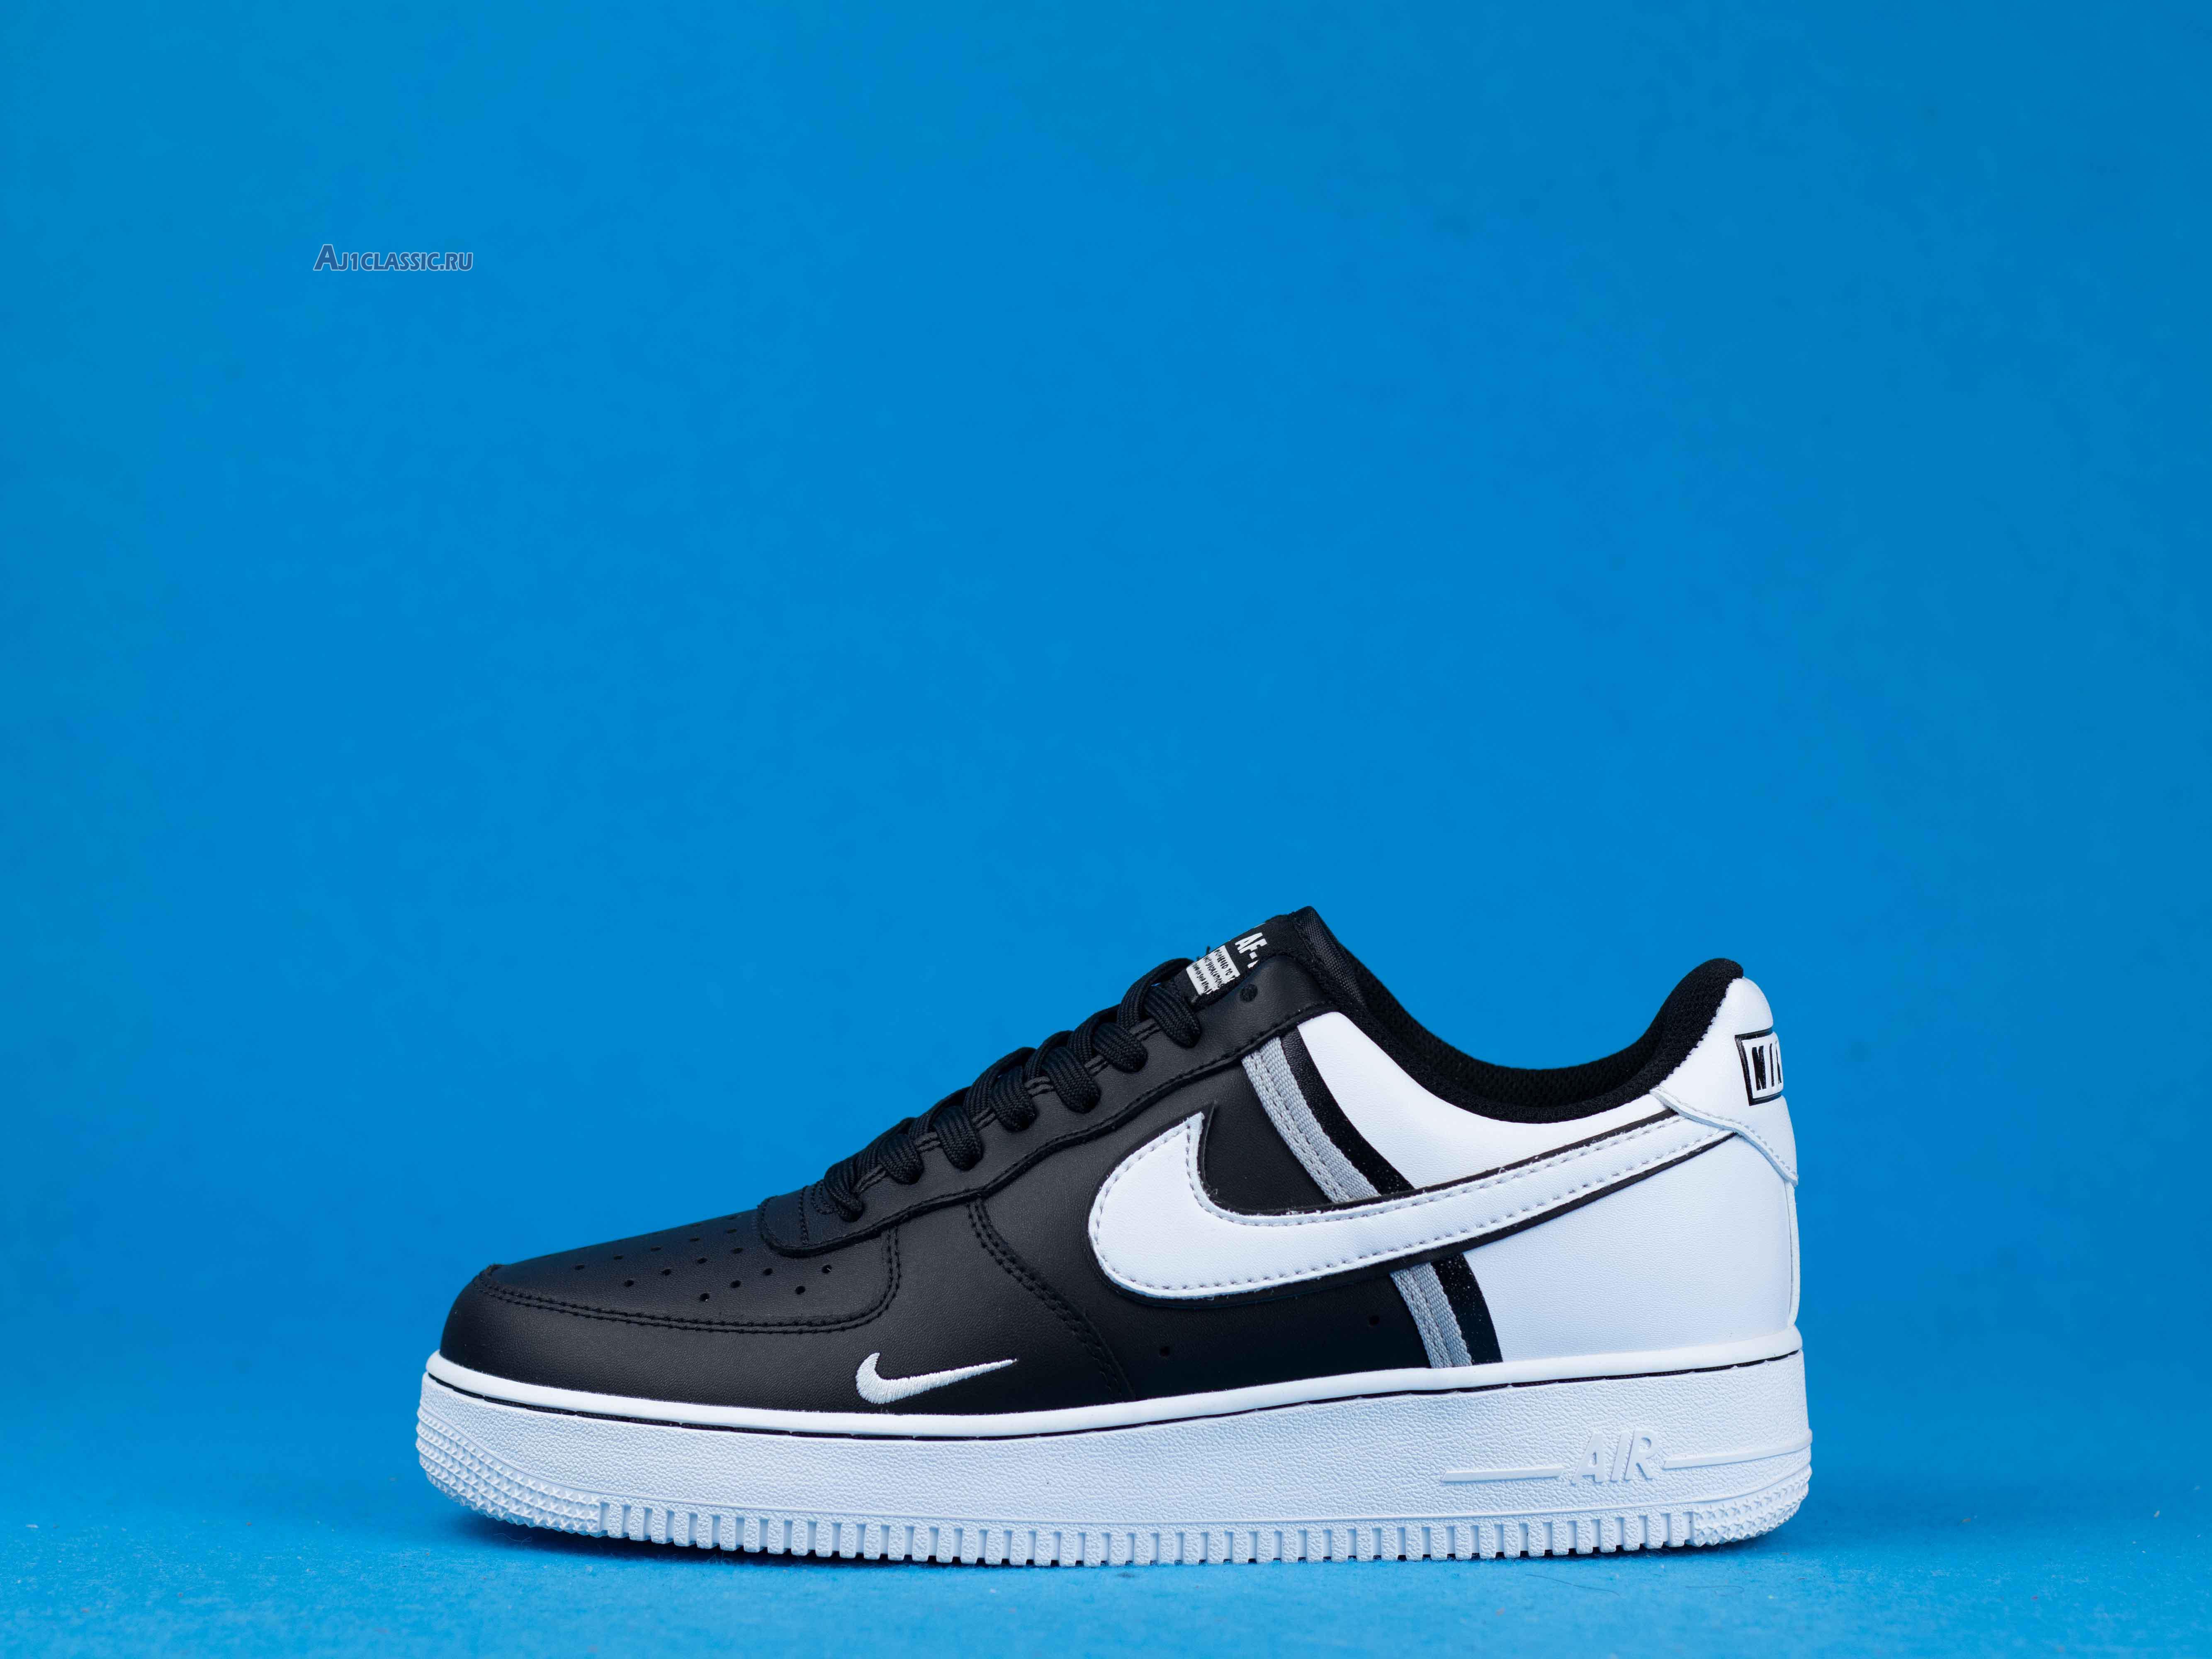 Nike Air Force 1 07 LV8 Black CI0061-001 Black/White/Grey Sneakers